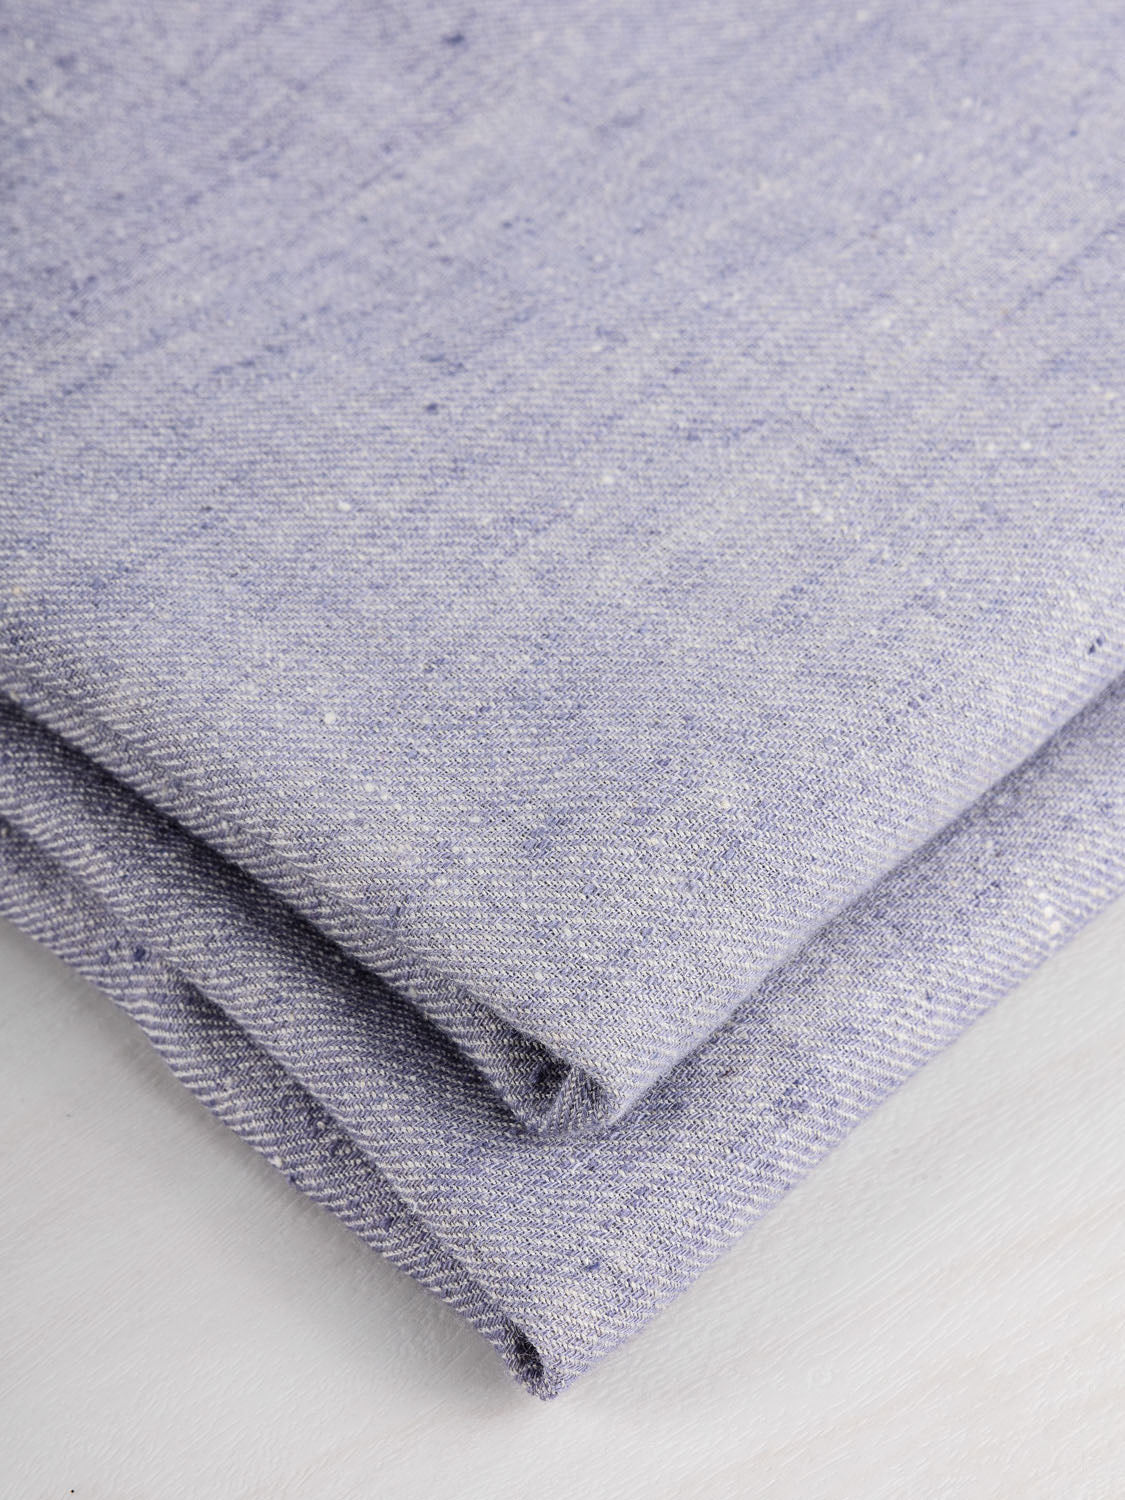 Artisanal Eri  'Peace' Silk Twill - Lavender | Core Fabrics